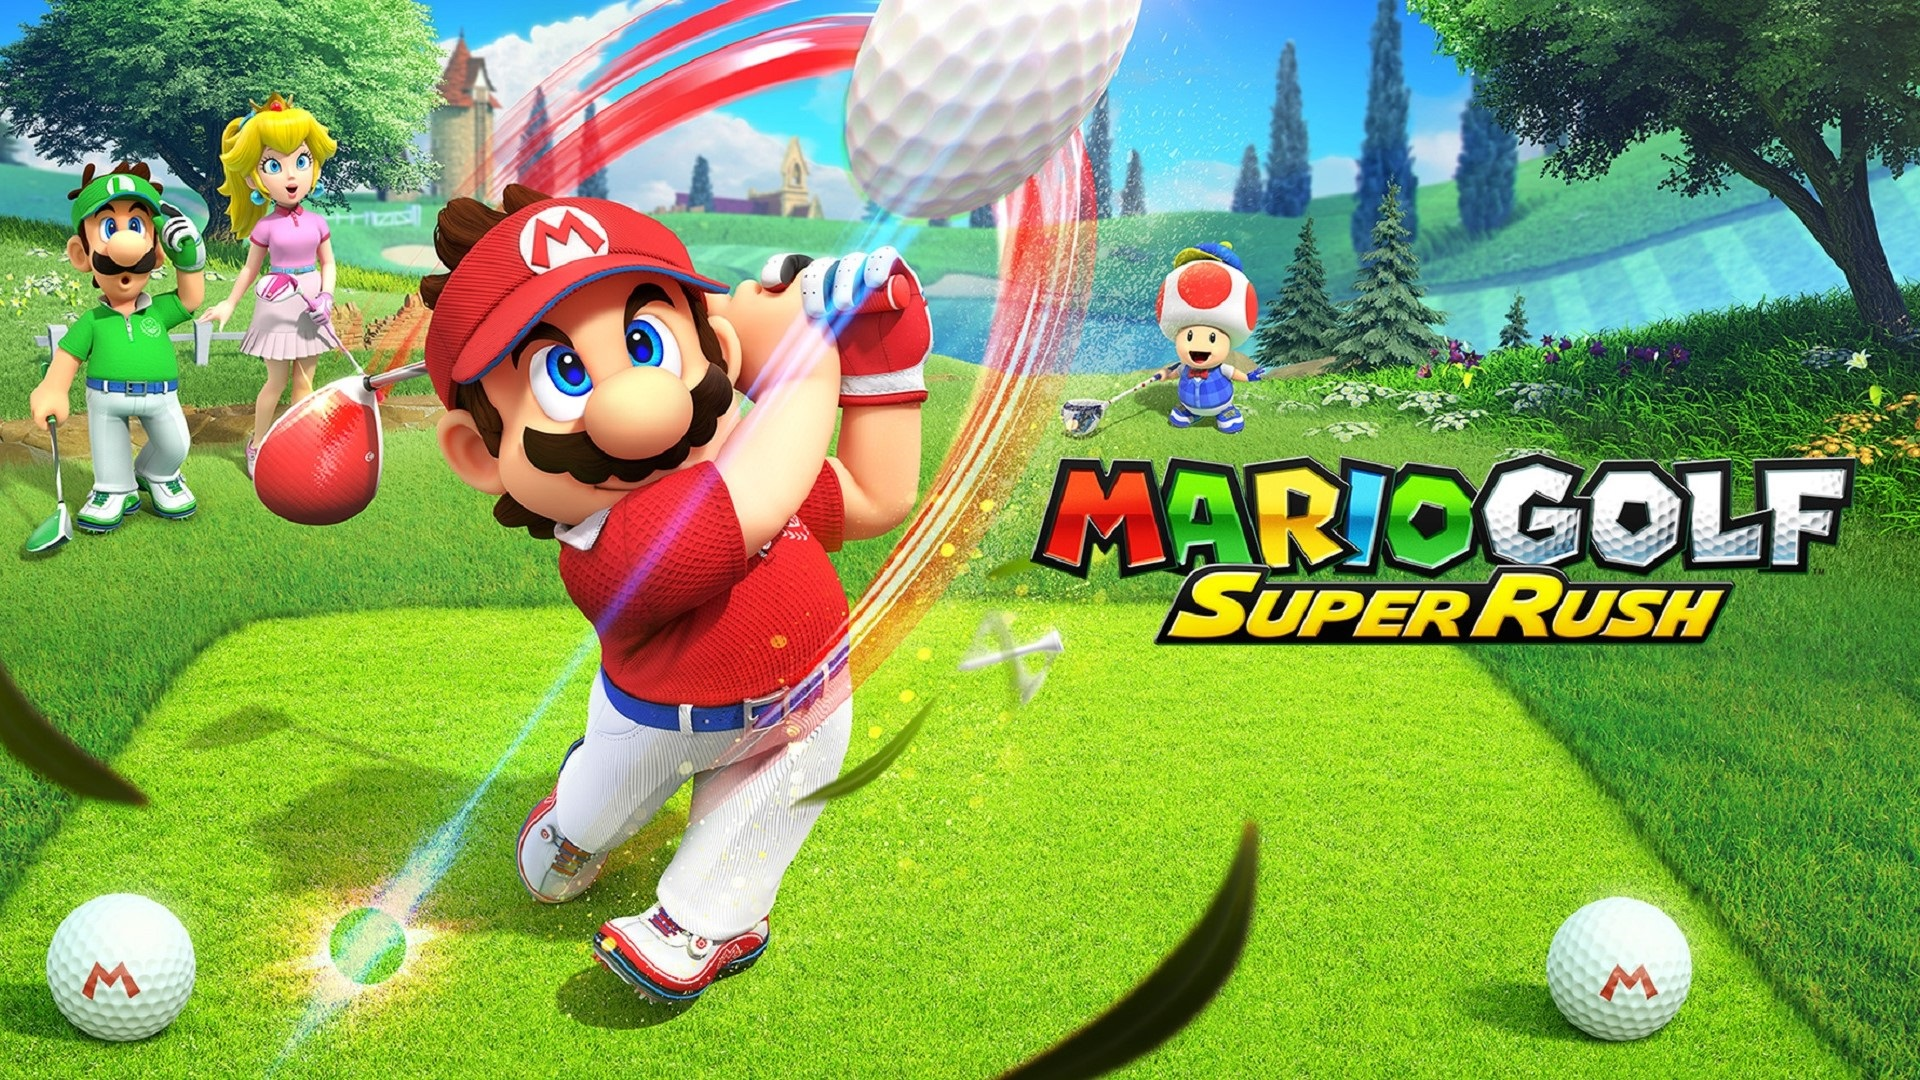 Mario Golf: Super Rush ปล่อยอัปเดตฟรีครั้งสุดท้าย เพิ่มโหมดแข่ง ตัวละคร และสนามใหม่